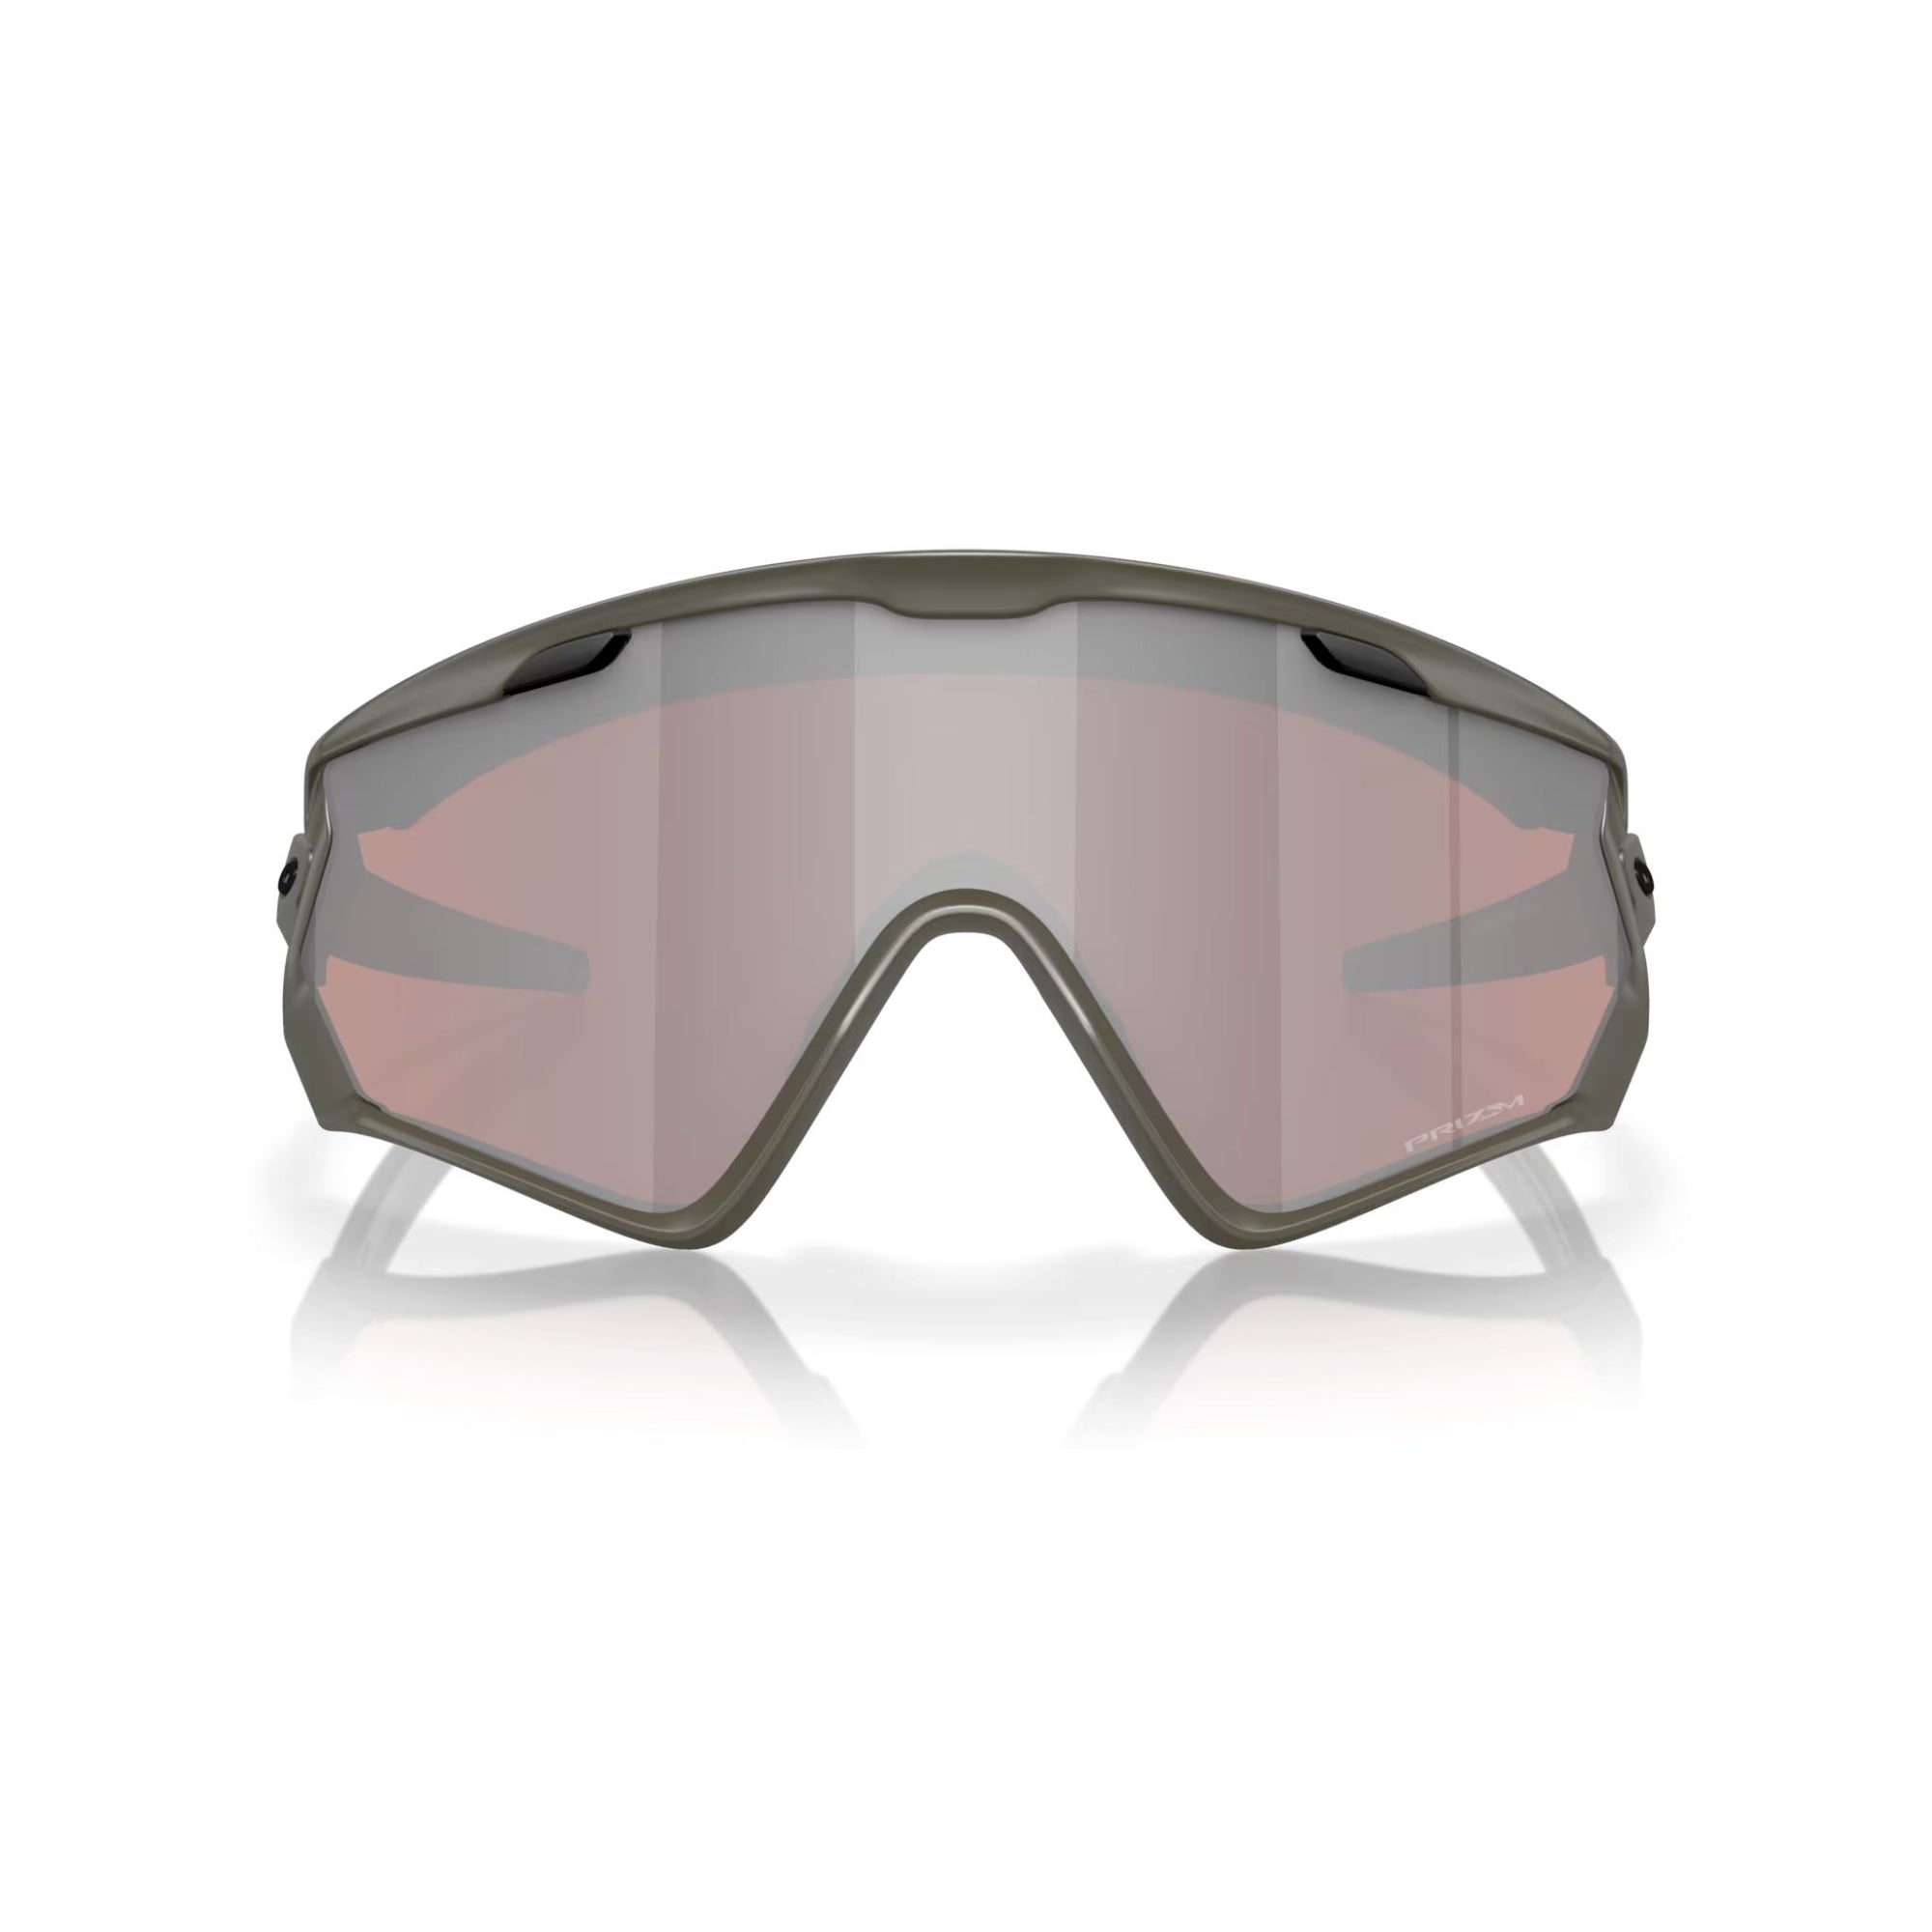 Oakley Wind Jacket 2.0 Matte Olive Sunglasses - Prizm Snow Black Sunglasses Oakley 